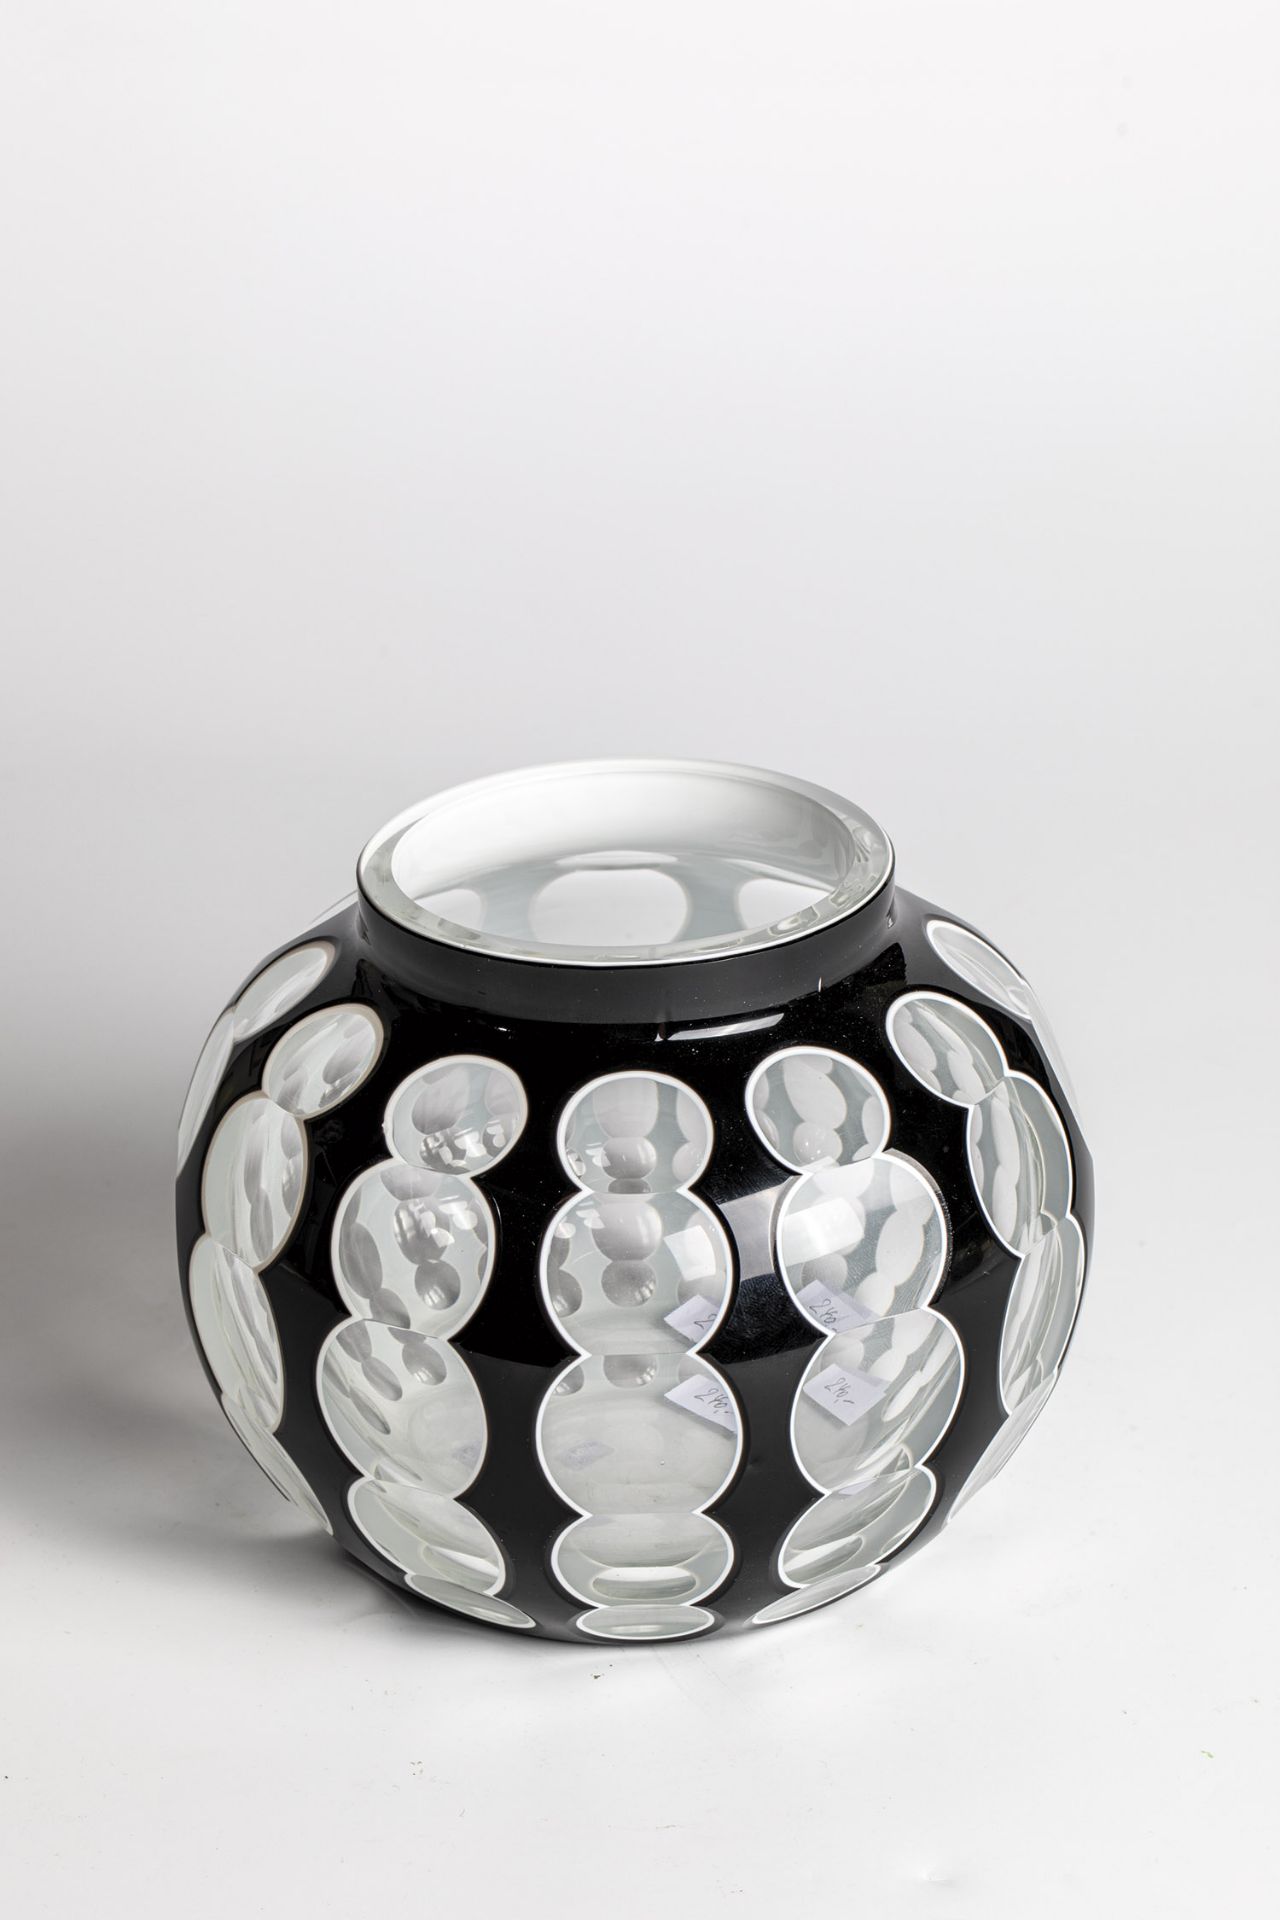 Ball vase ''Borussia'' Carl Schappel, Haida, ca. 1913/14 Colourless glass, double overlaid in